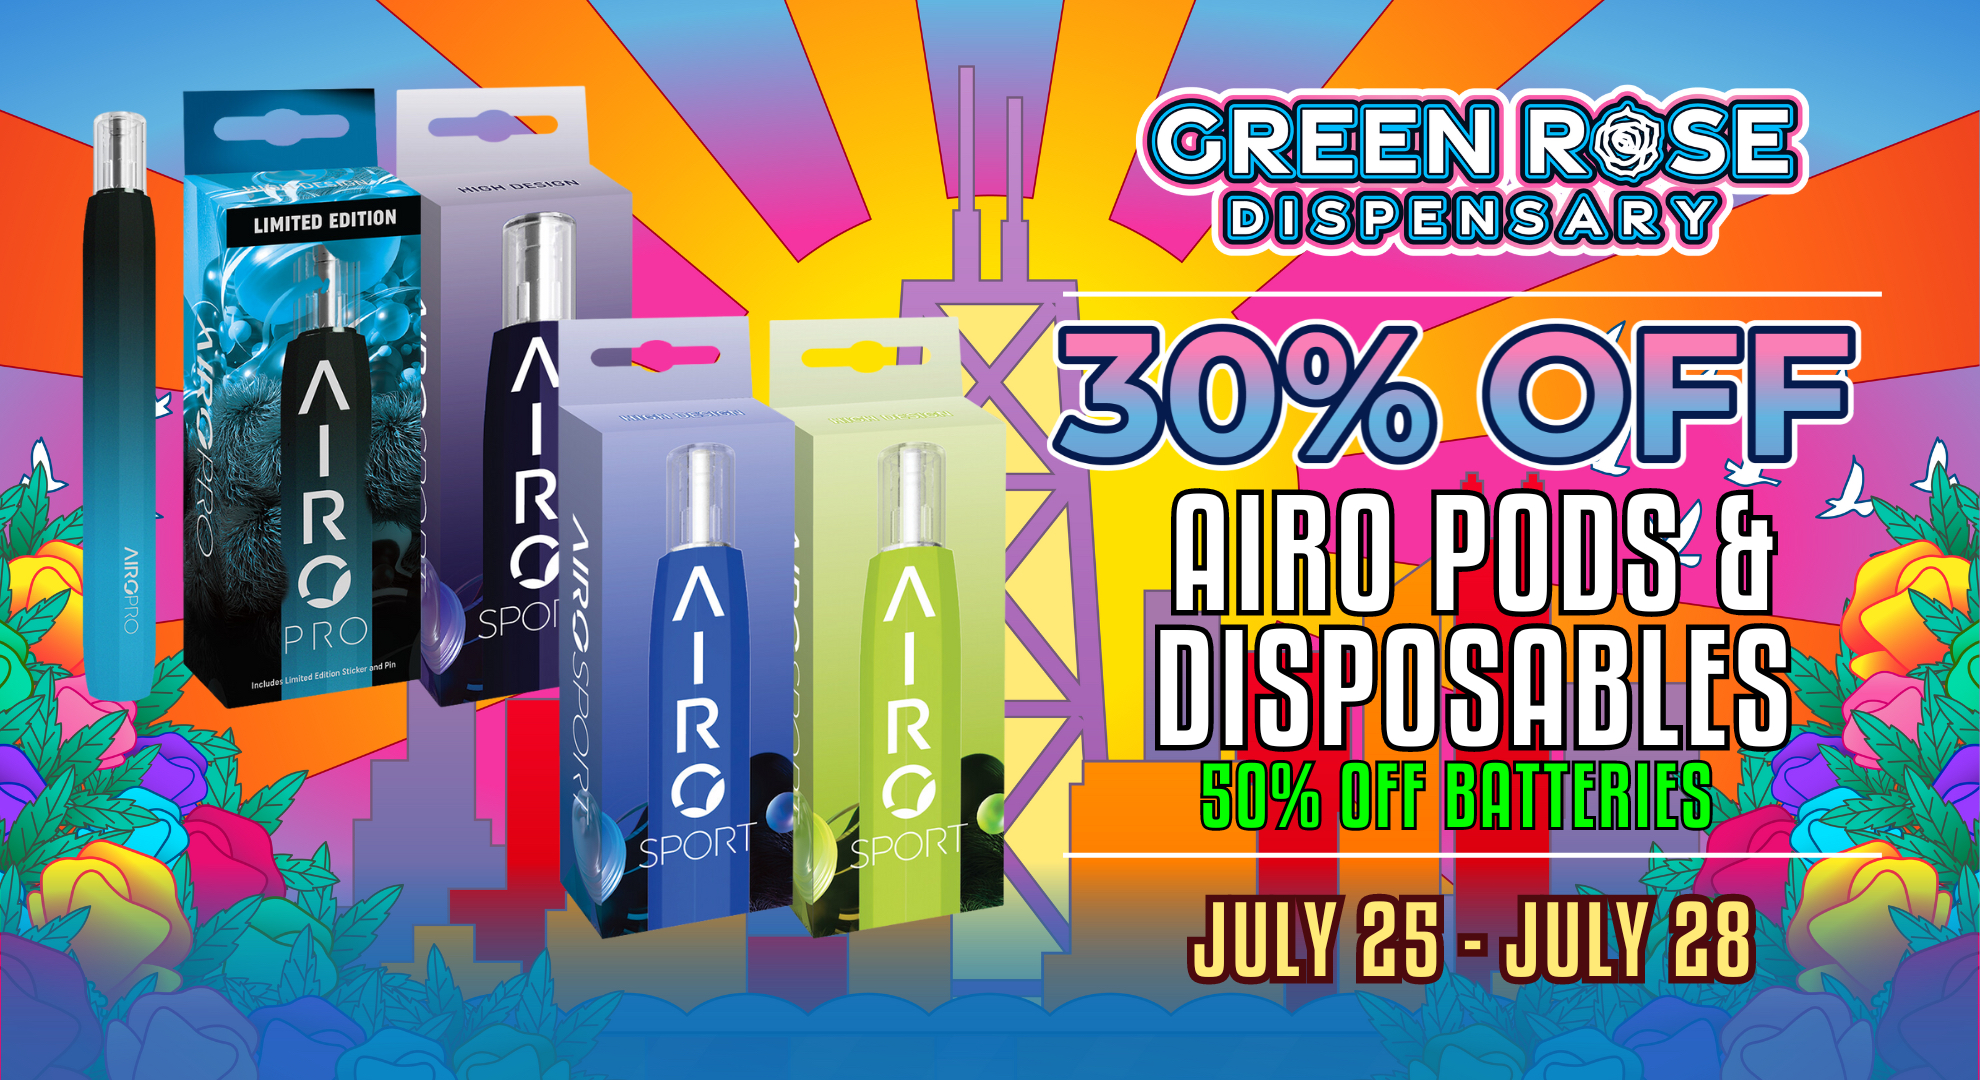 Cannabis Promo, Cannabis Sales, Cannabis Discounts, Cannabis on Sale, 30% Off Airo Pods & Disposables!